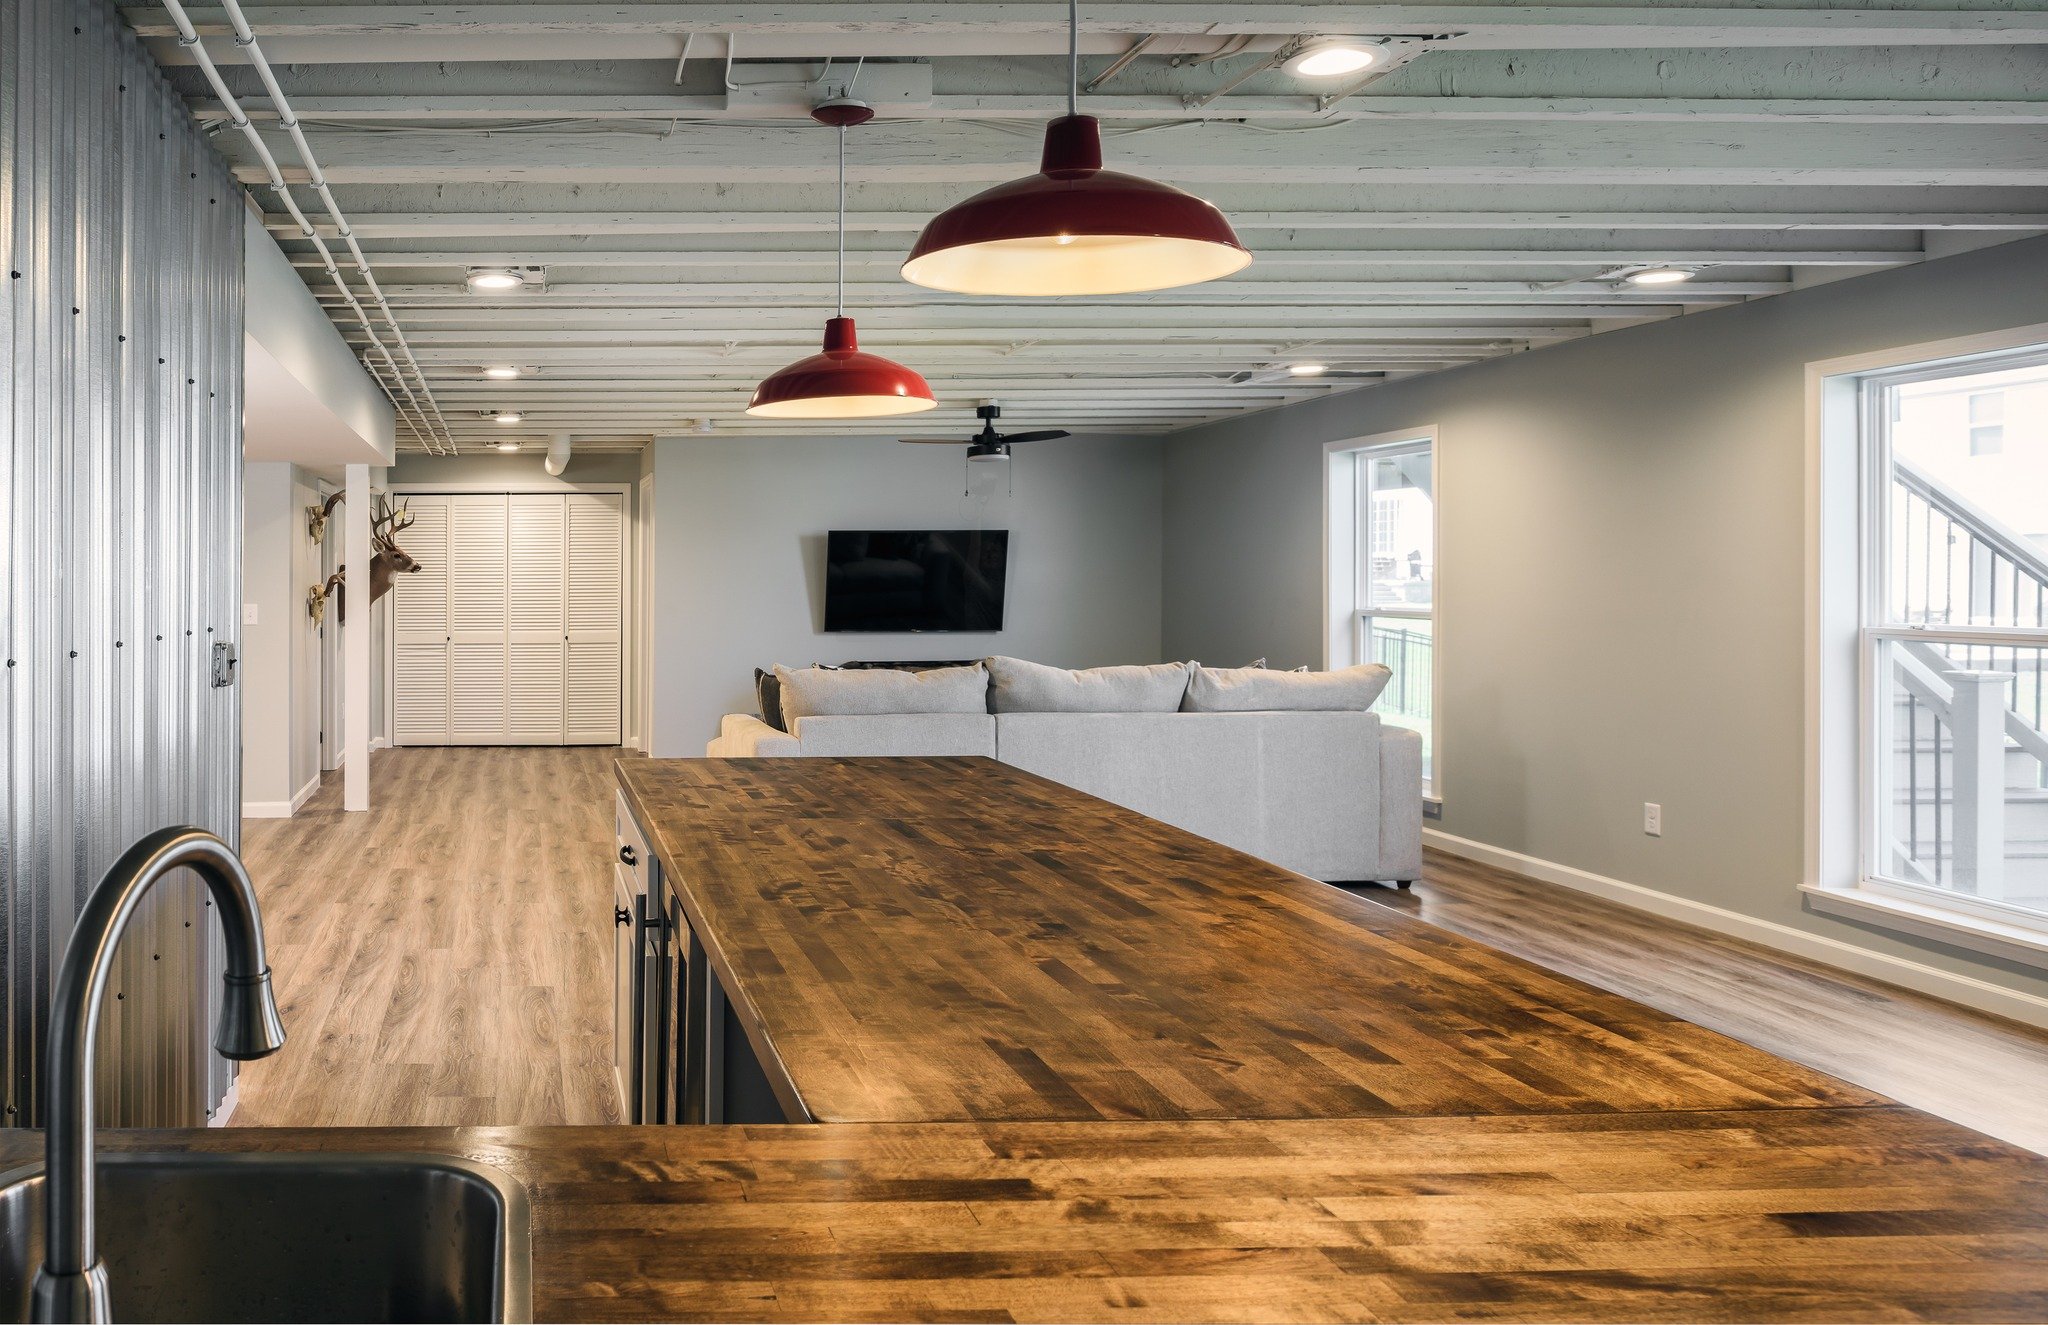 These sleek and smooth countertops redefine rustic elegance in this basement.
#renovation #remodeling #homeimprovement #ludesignbuild #interiordesign
Designer: @mcavindesign
Photographer: @KarenPalmerPhotography